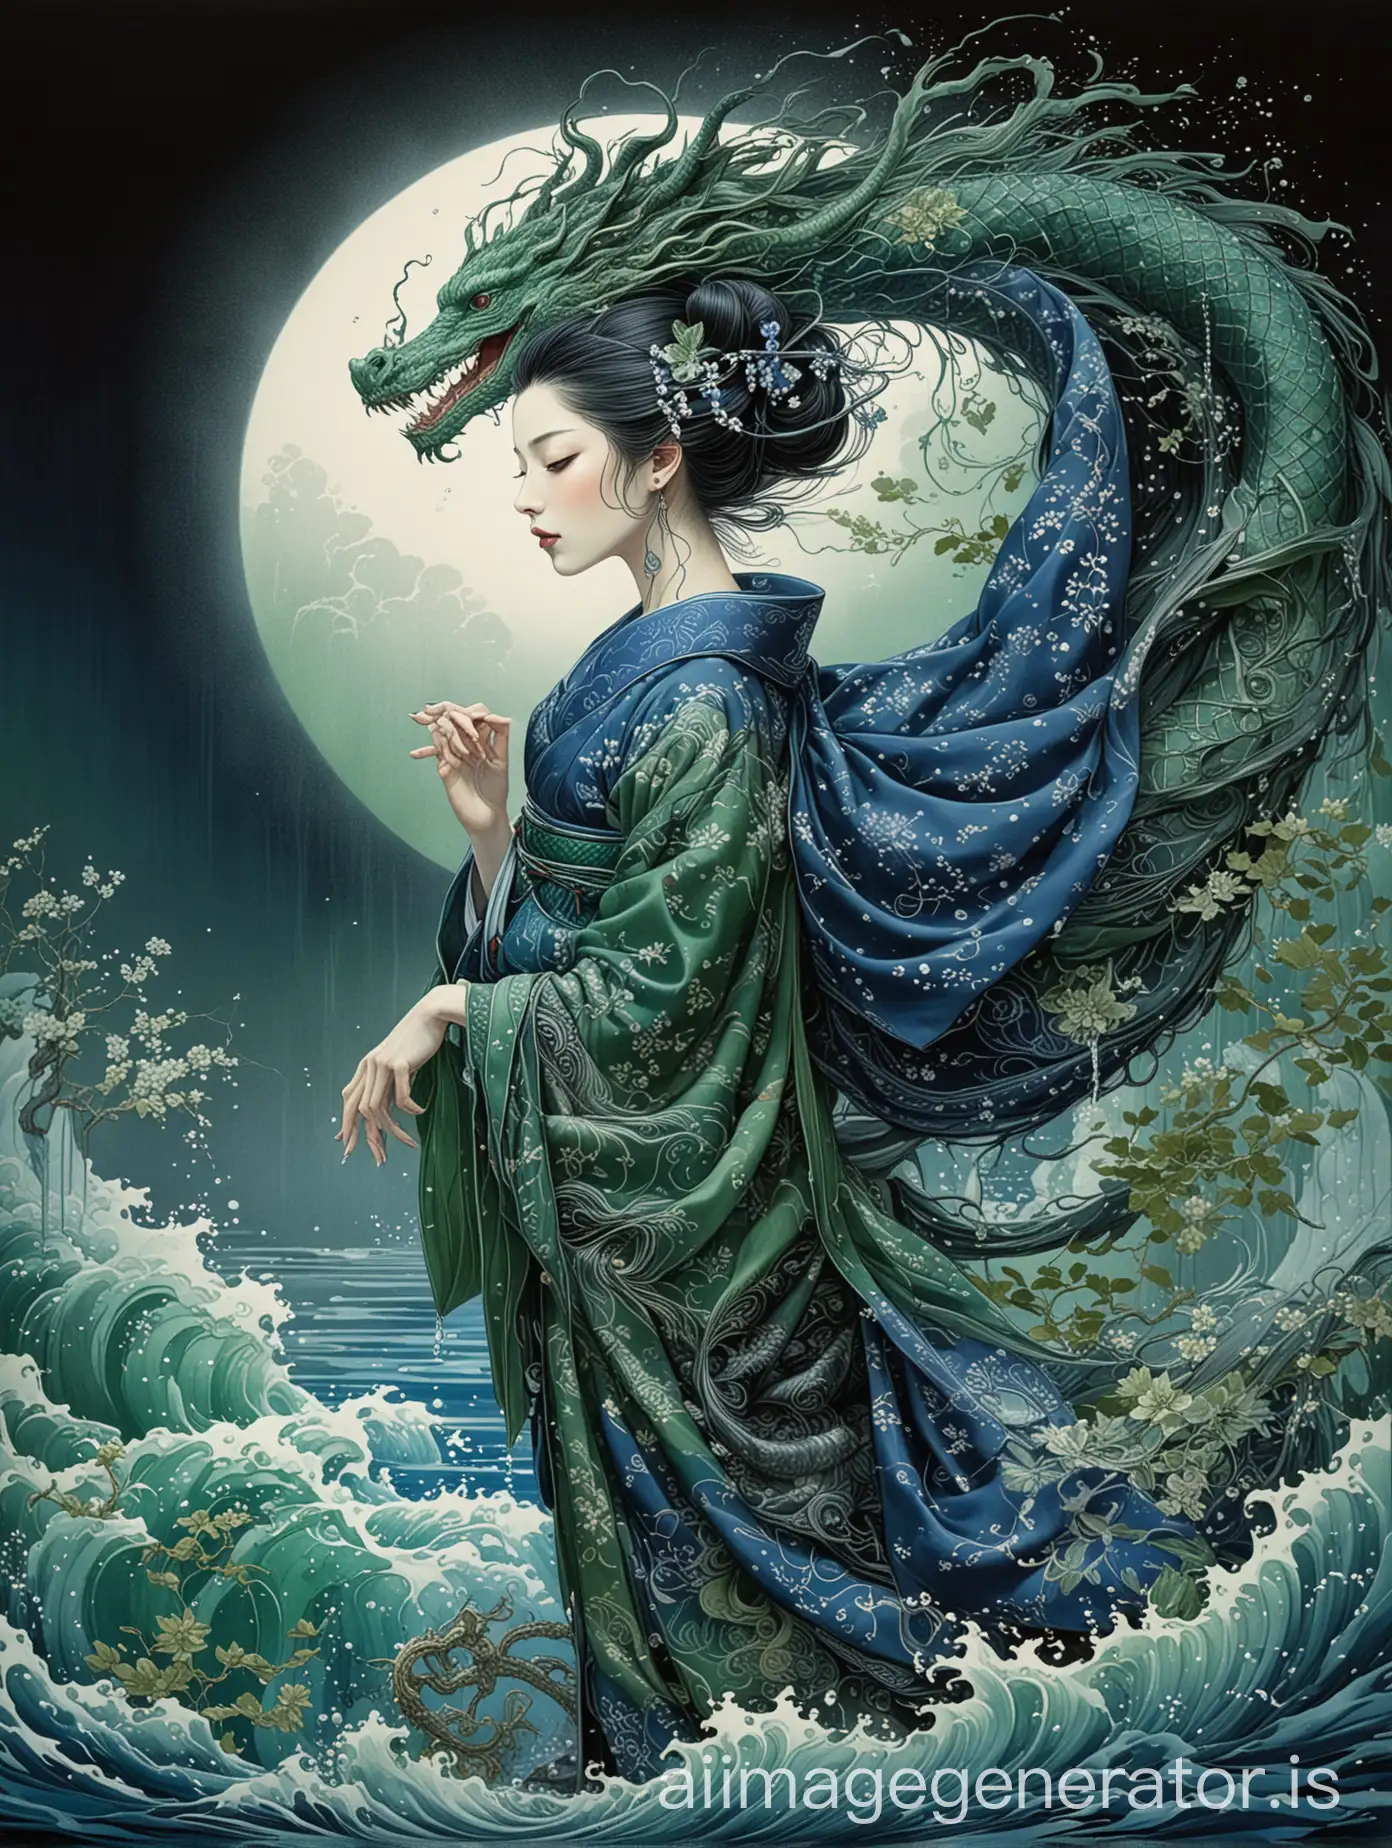 Japanese-Woman-Embracing-Dragon-in-Moonlit-Waters